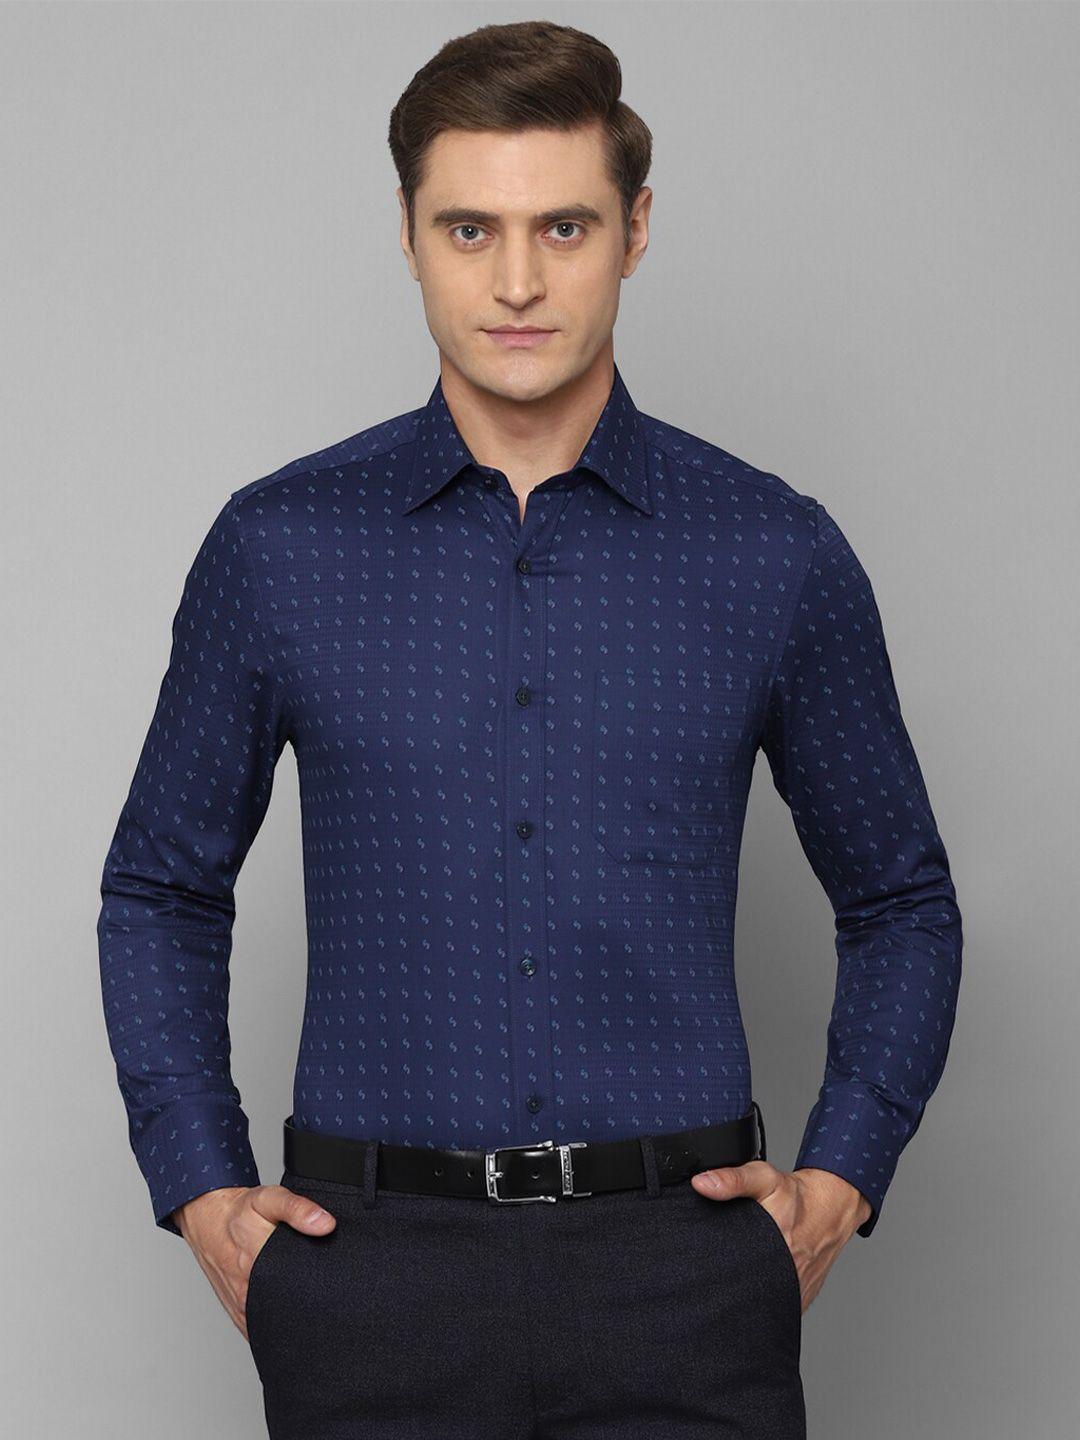 louis philippe men navy blue printed formal shirt